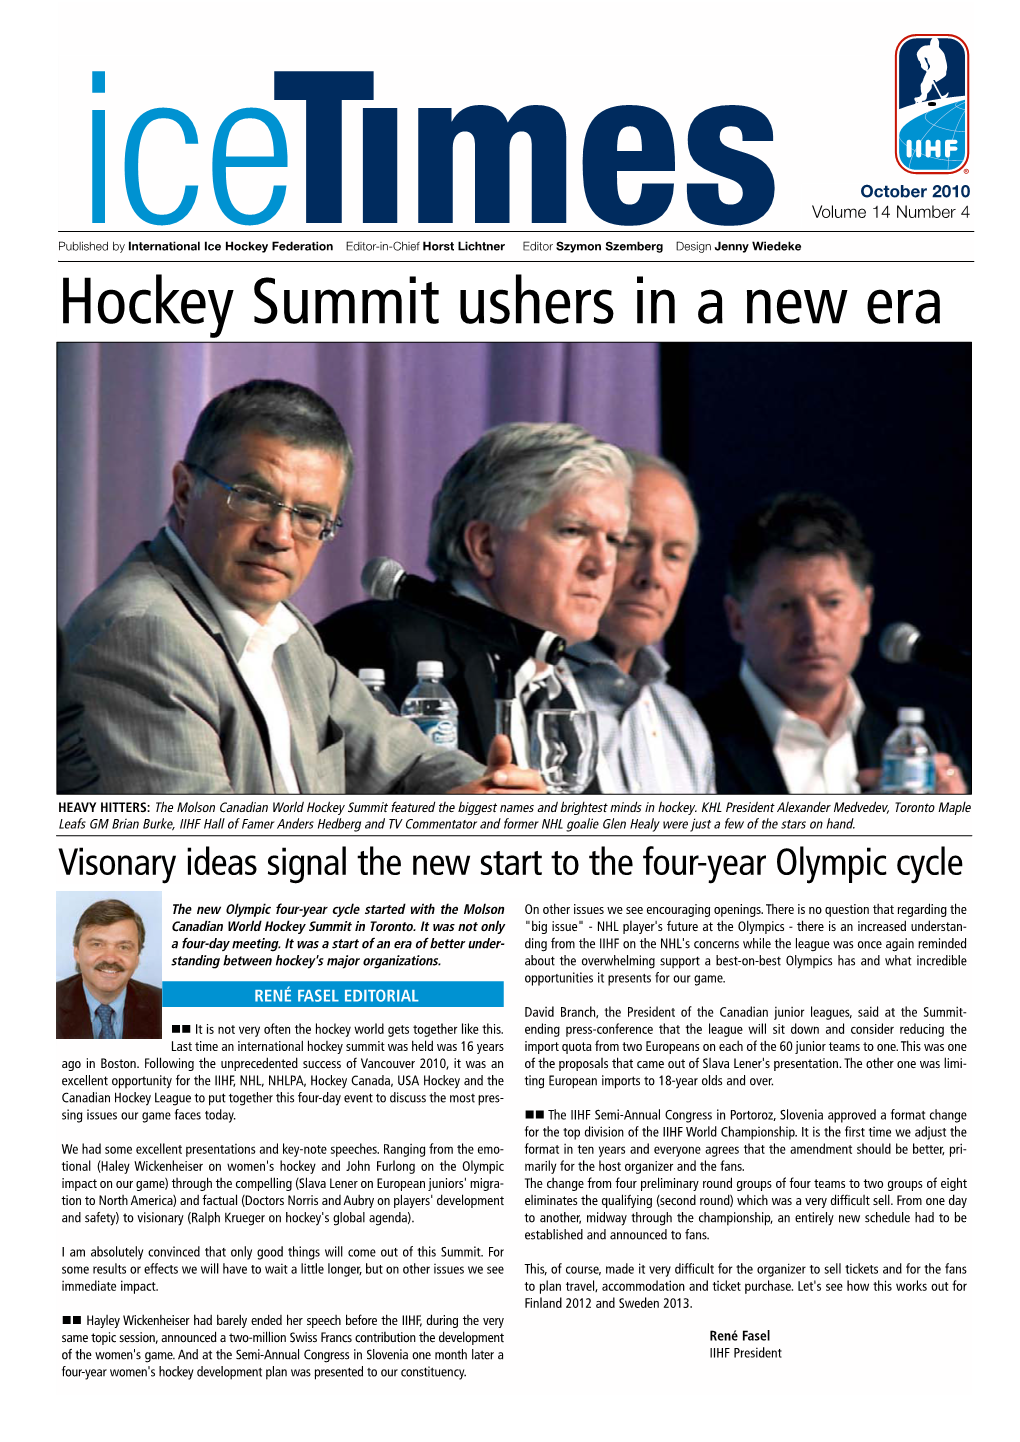 Hockey Summit Ushers in a New Era